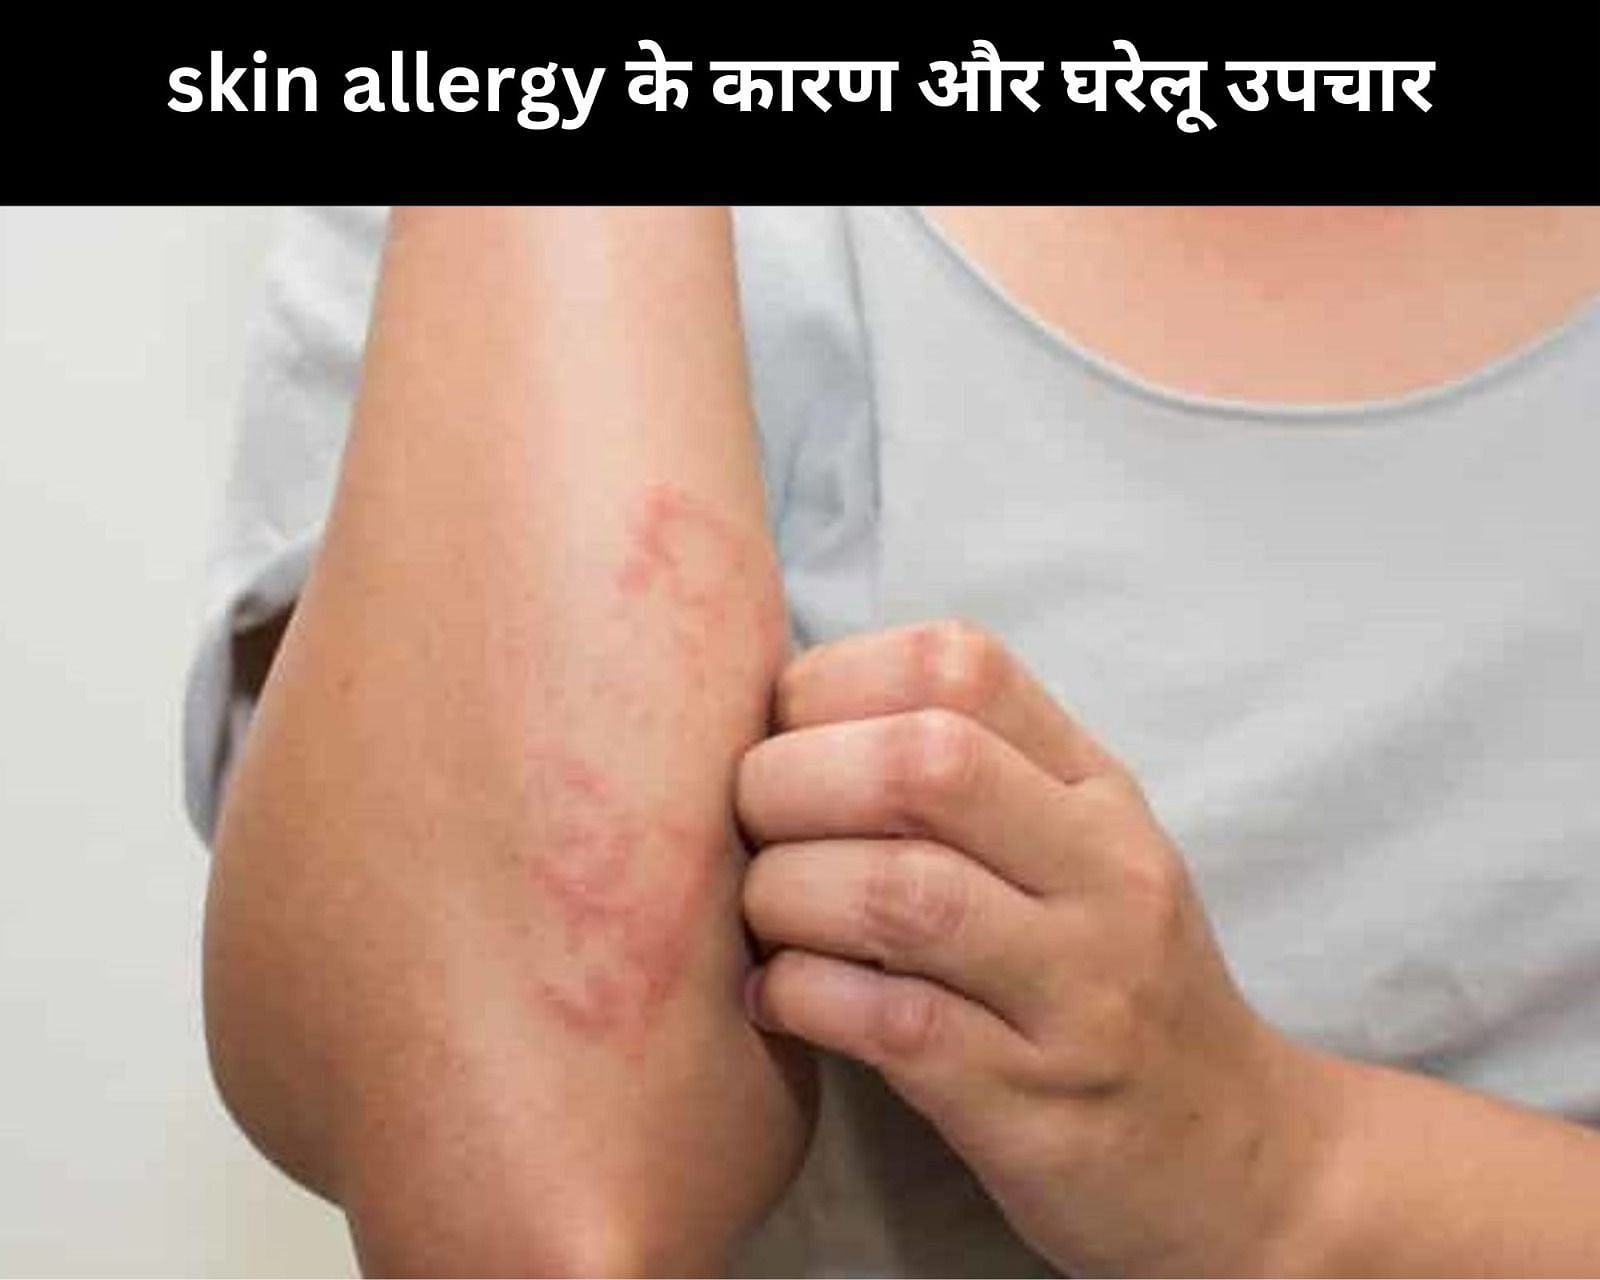 skin allergy के 4 कारण और 5 घरेलू उपचार (फोटो - sportskeedaहिन्दी)